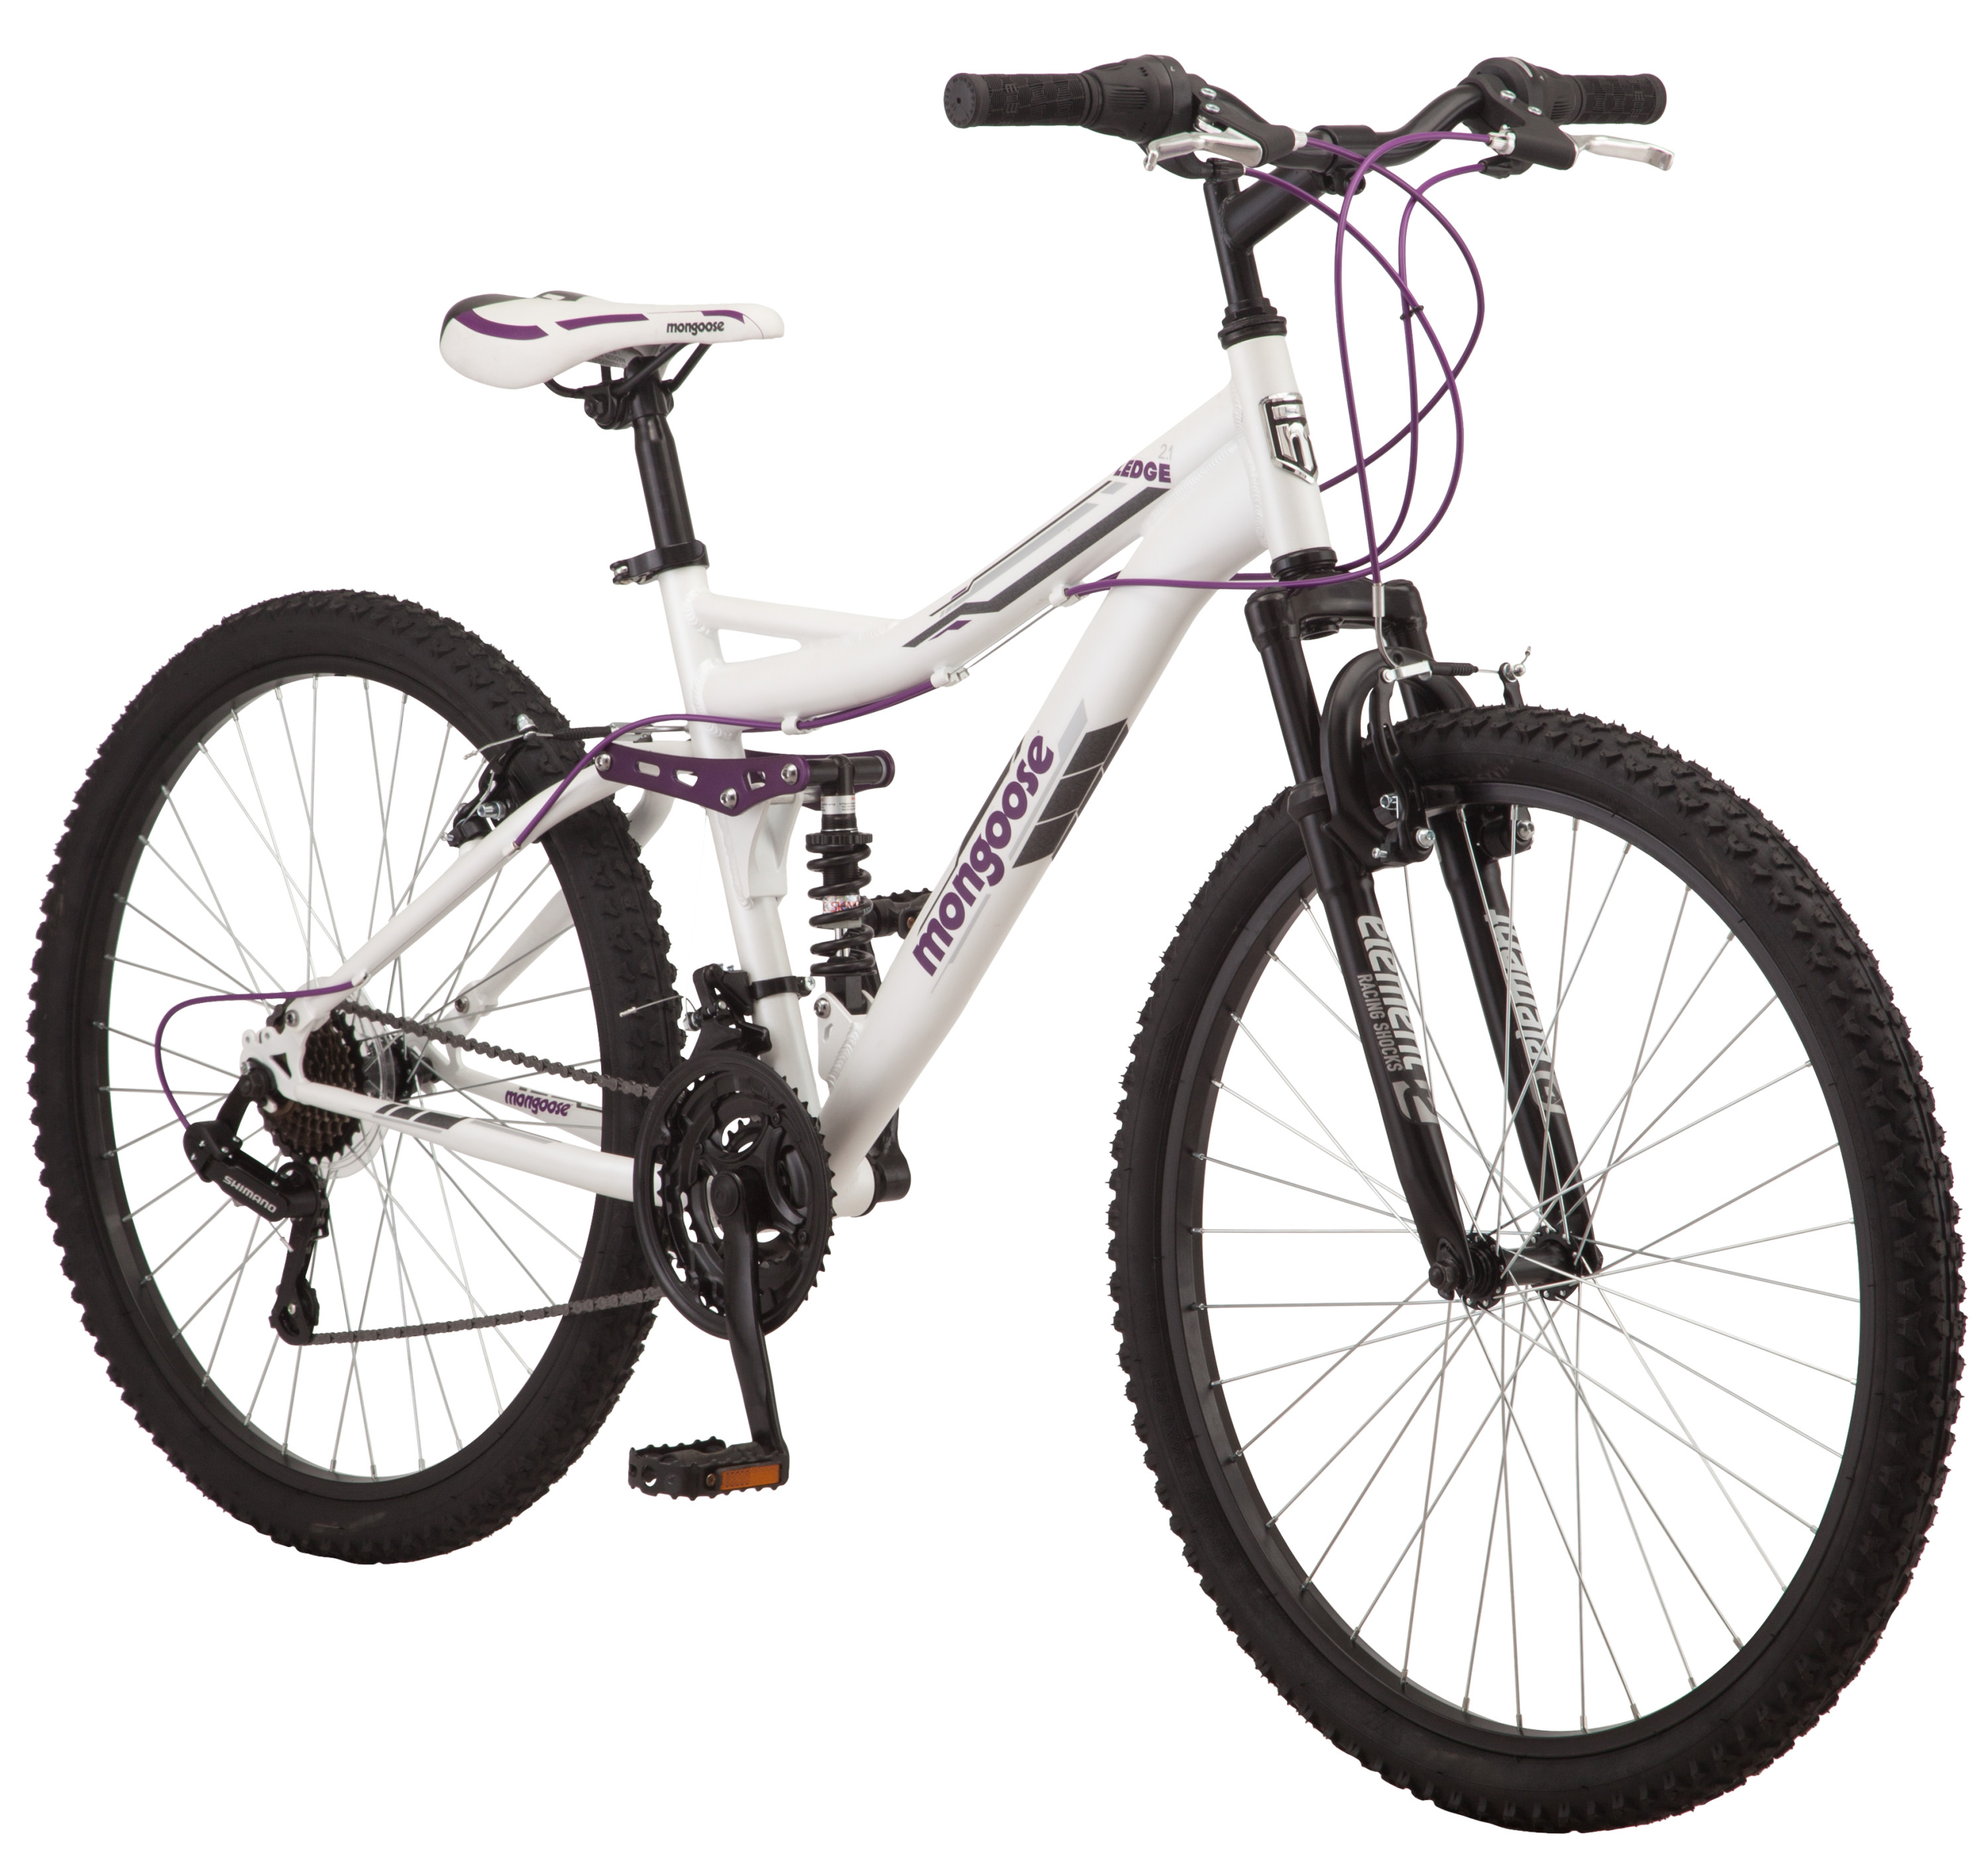 Mongoose Ledge 2.1 Mountain Bike, 26-inch wheels, 21 speeds, womens frame, white - image 1 of 7